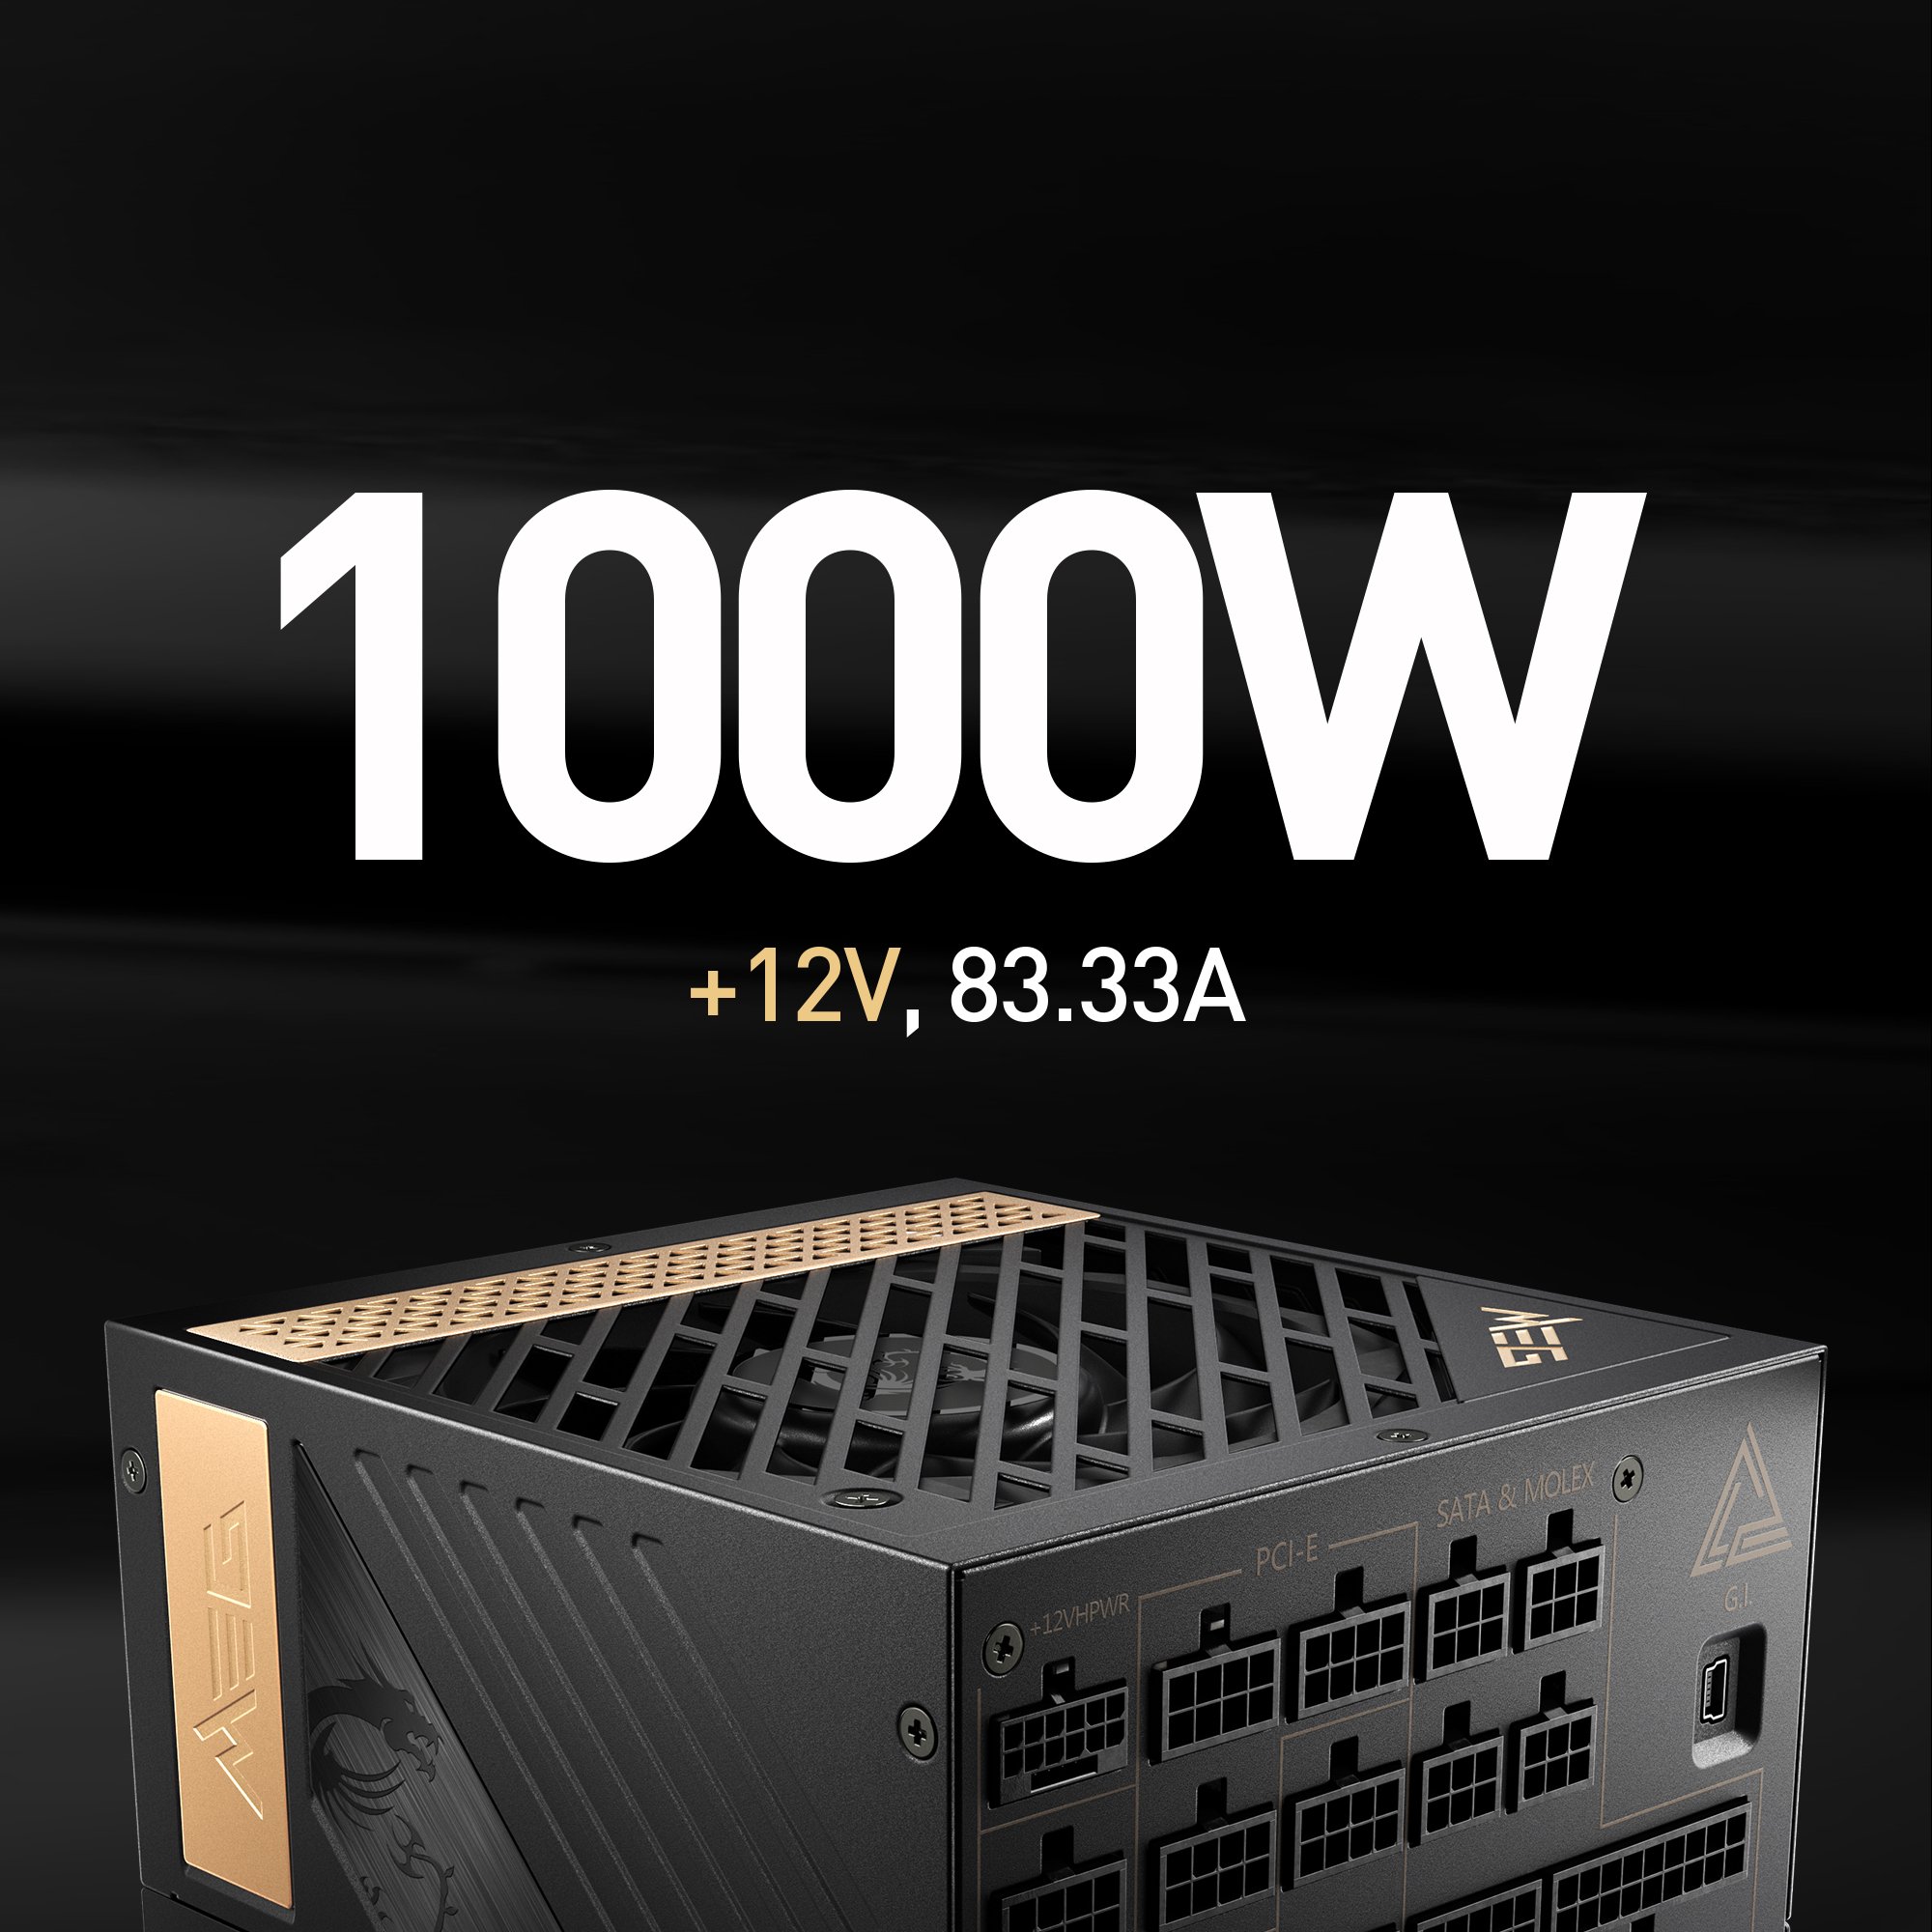 The MEG Ai1000P PCIE5 power supply